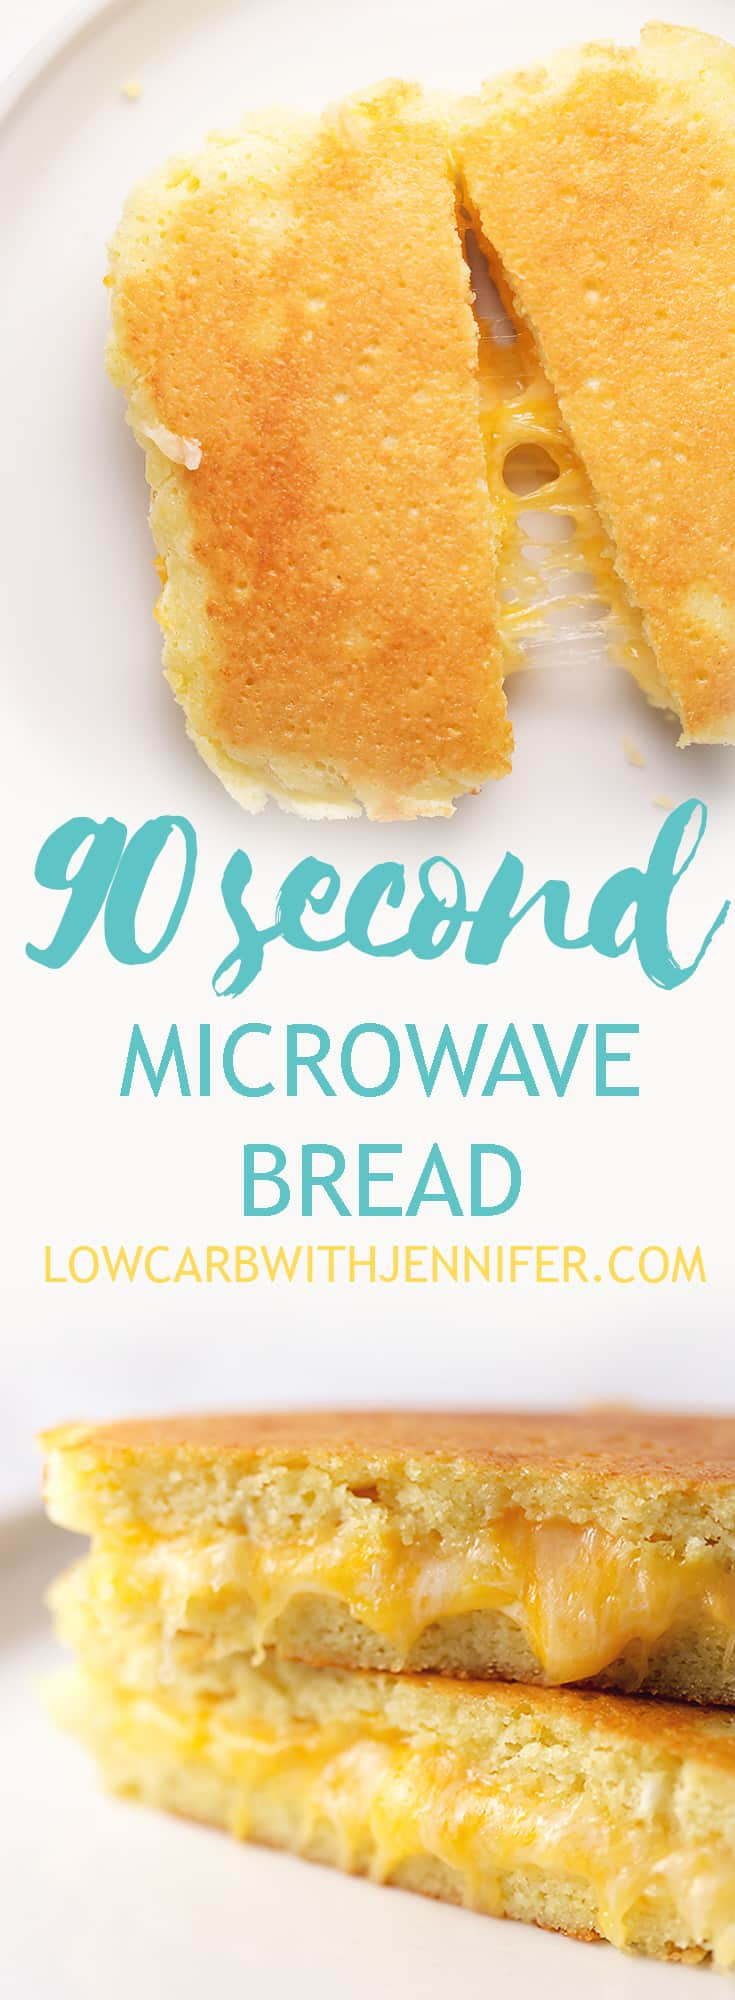 90 Keto Bread Coconut Flour
 90 Second Microwave Bread with Almond flour or Coconut